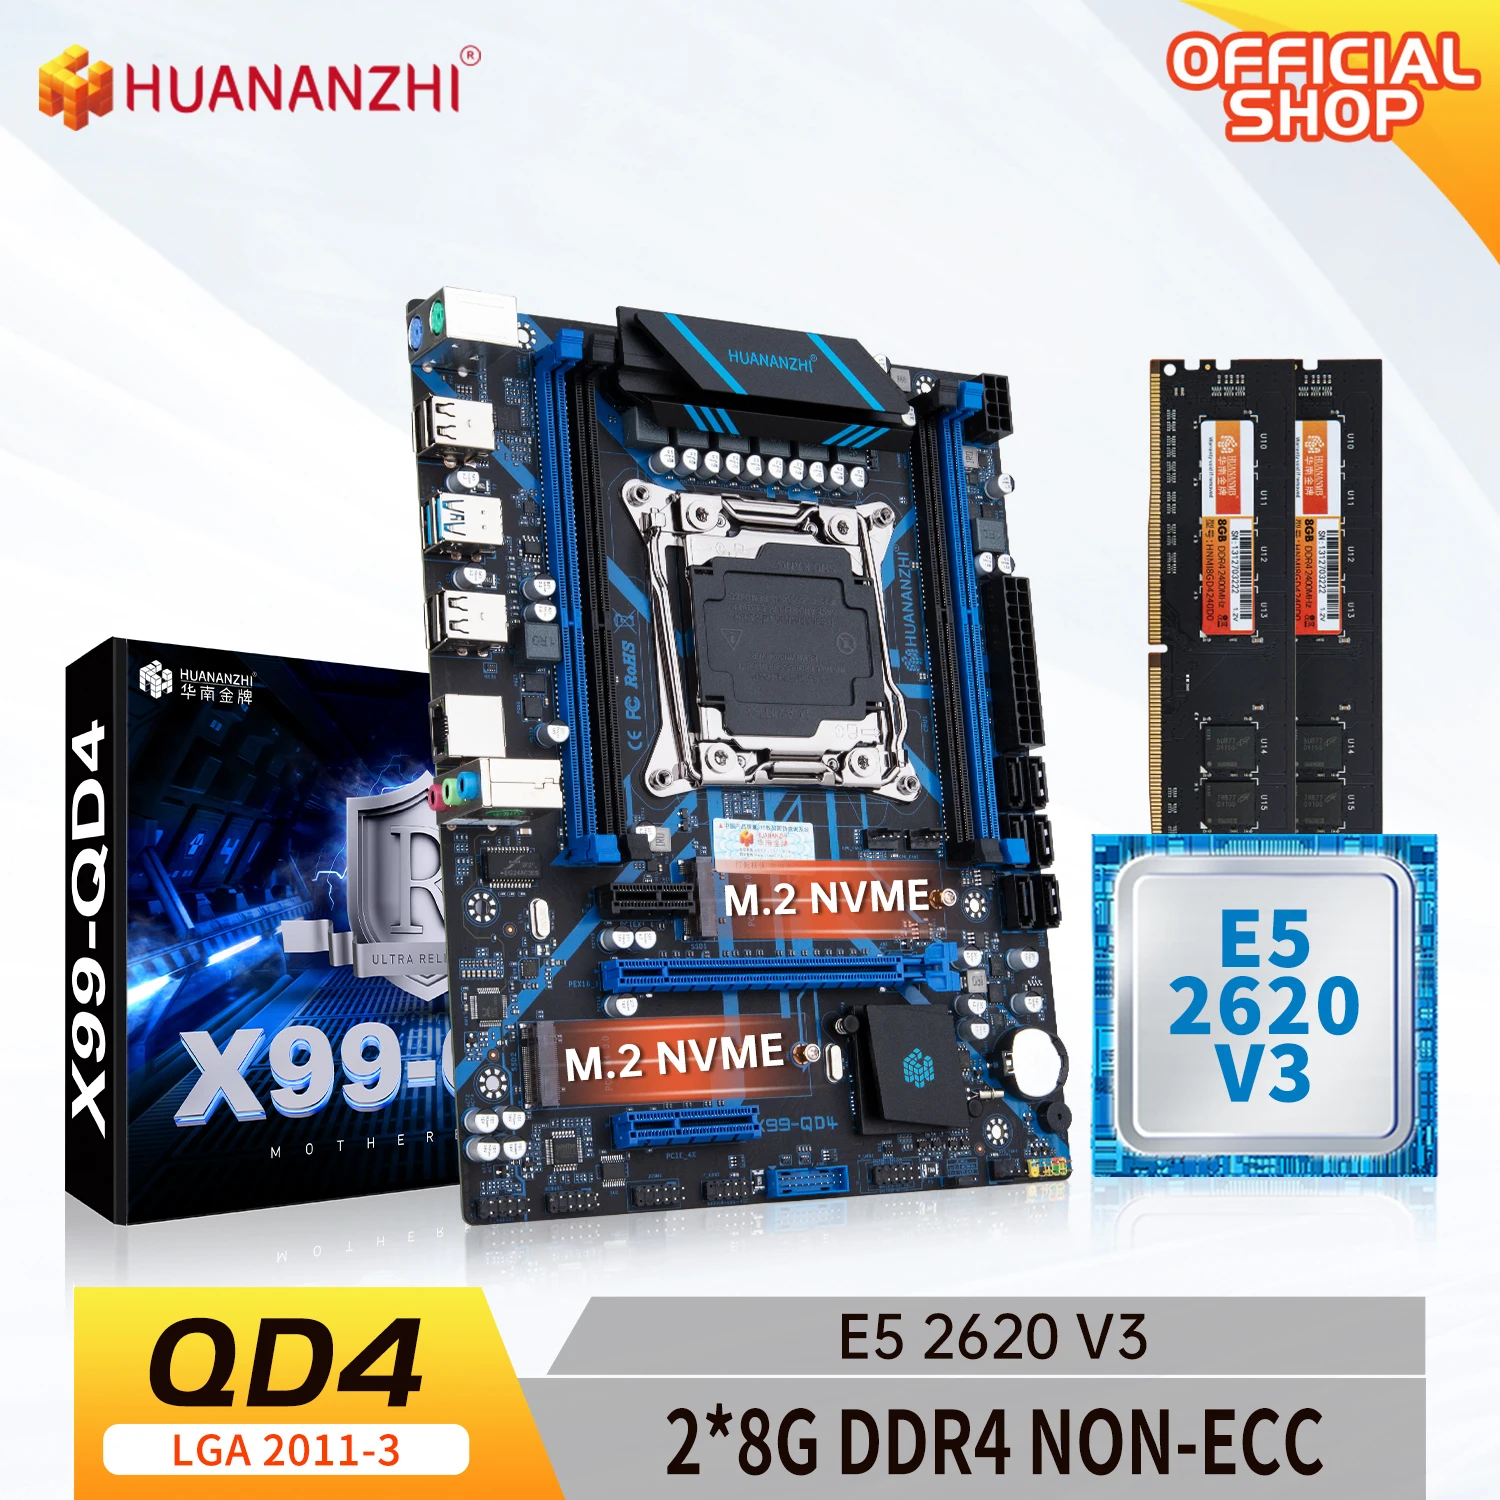 HUANANZHI X99 QD4 X99 Motherboard with Intel XEON E5 2620 V3 with 2*8G DDR4 NON-ECC Memory Combo Kit Set NVME USB 3.0